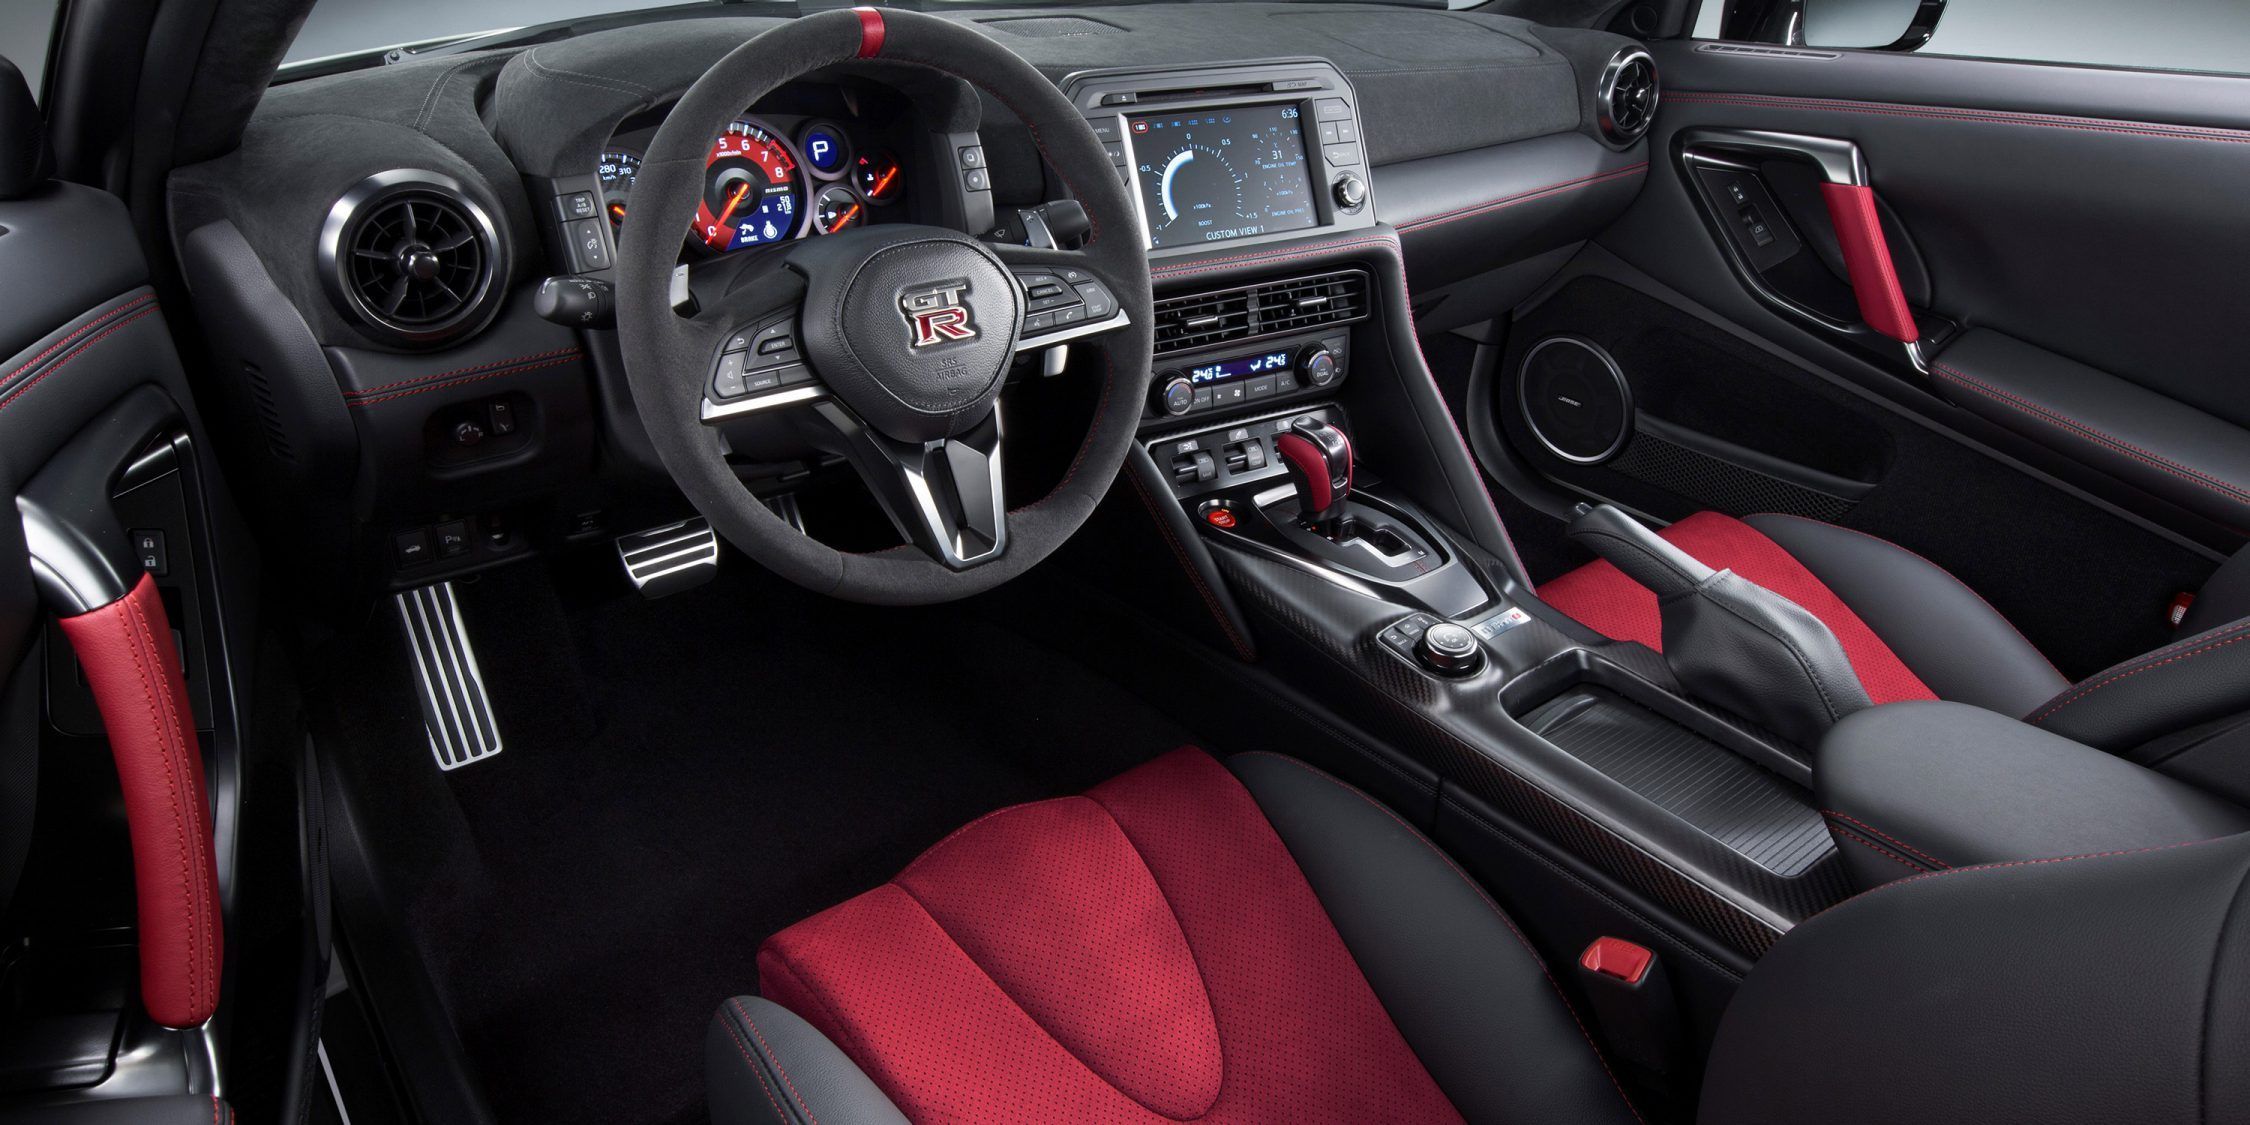 2020 Nissan GT-R Nismo interior, Nissan